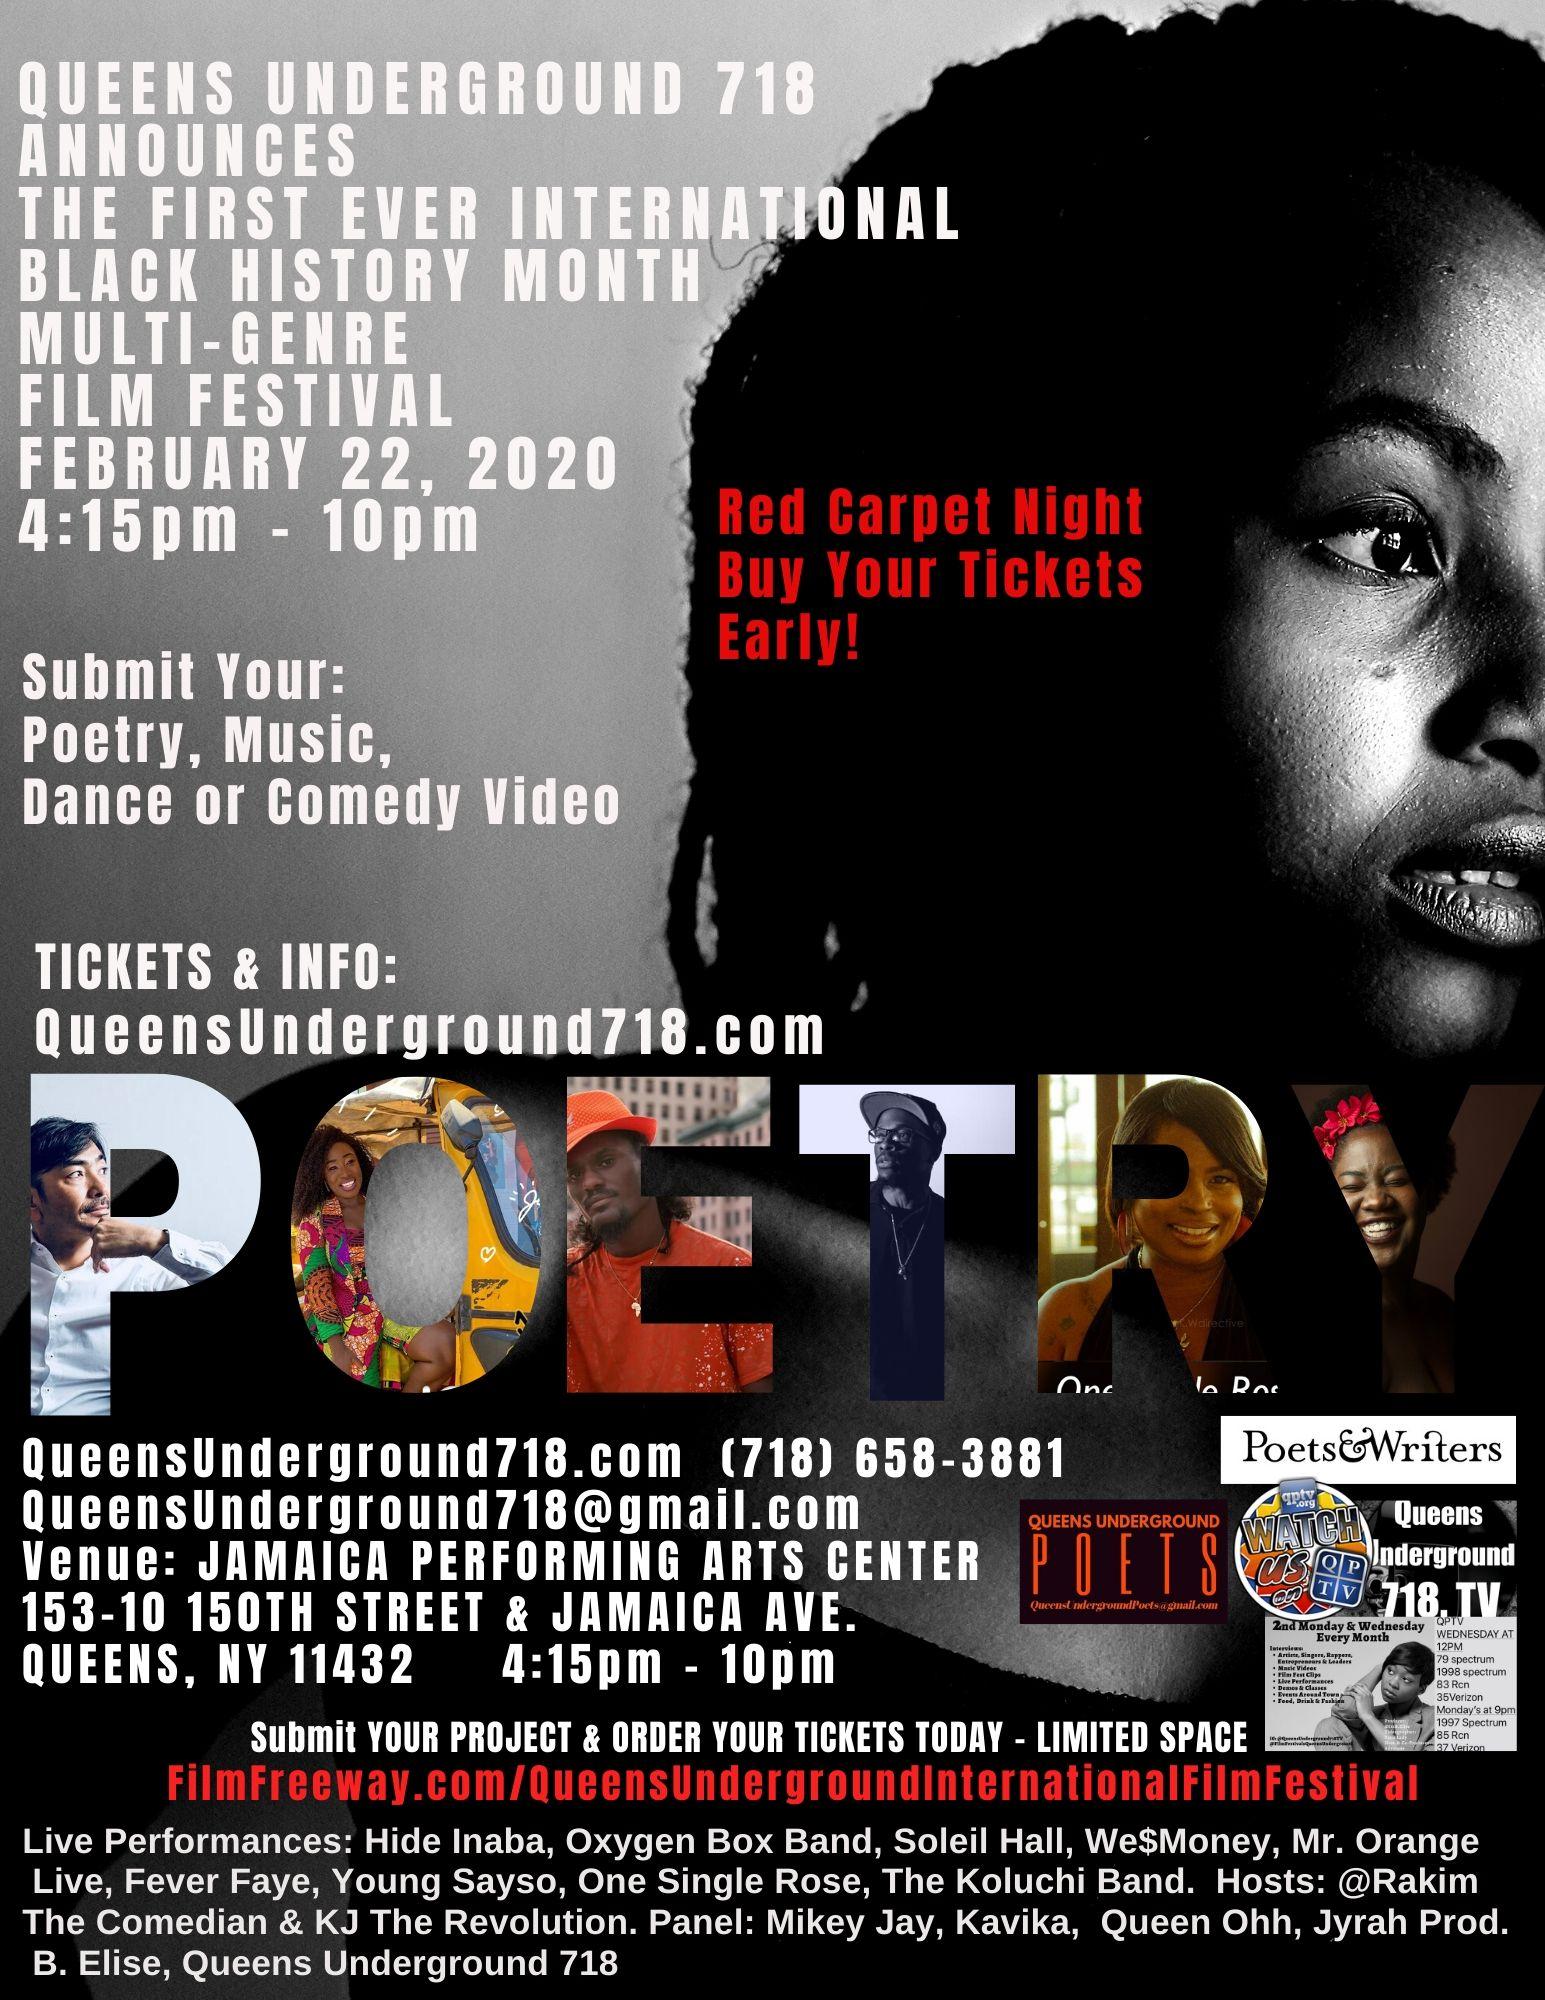 Film Festival Black History Month Shorts, Music, Poetry, Live Performances